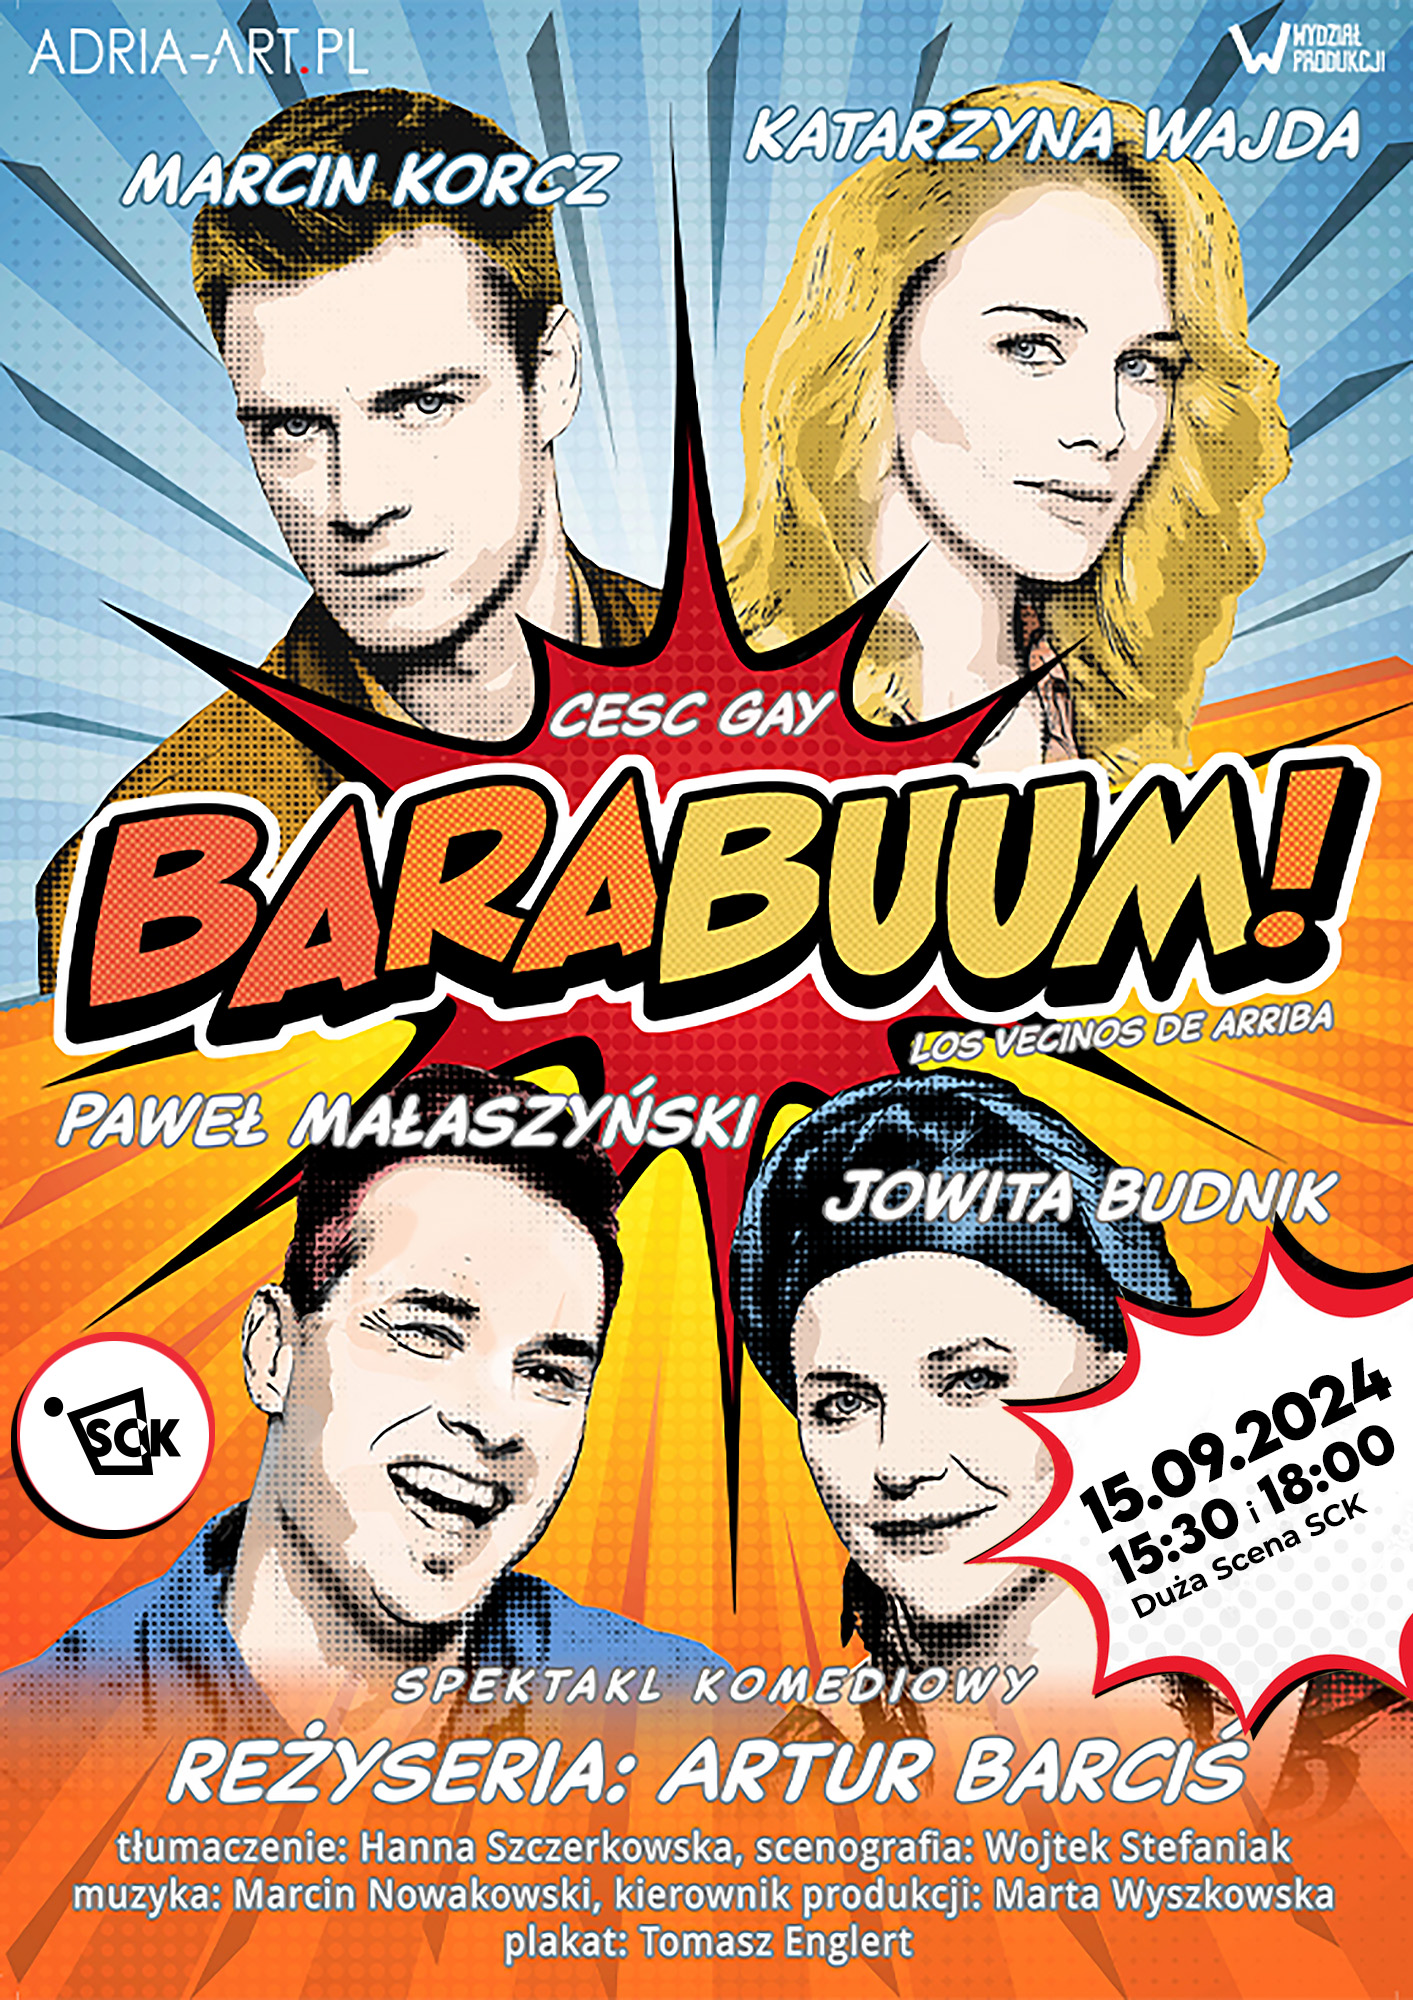 spektakl komediowy Barabuum